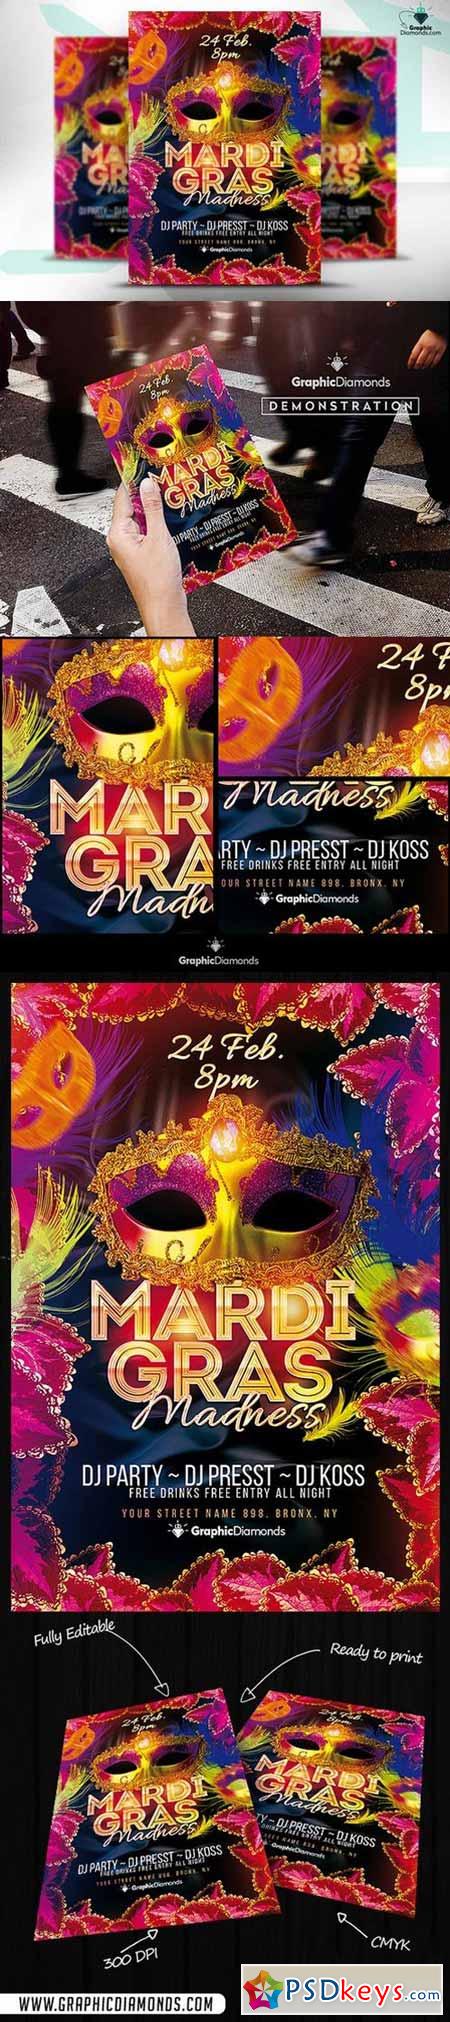 Mardi Gras Madness Flyer 484249